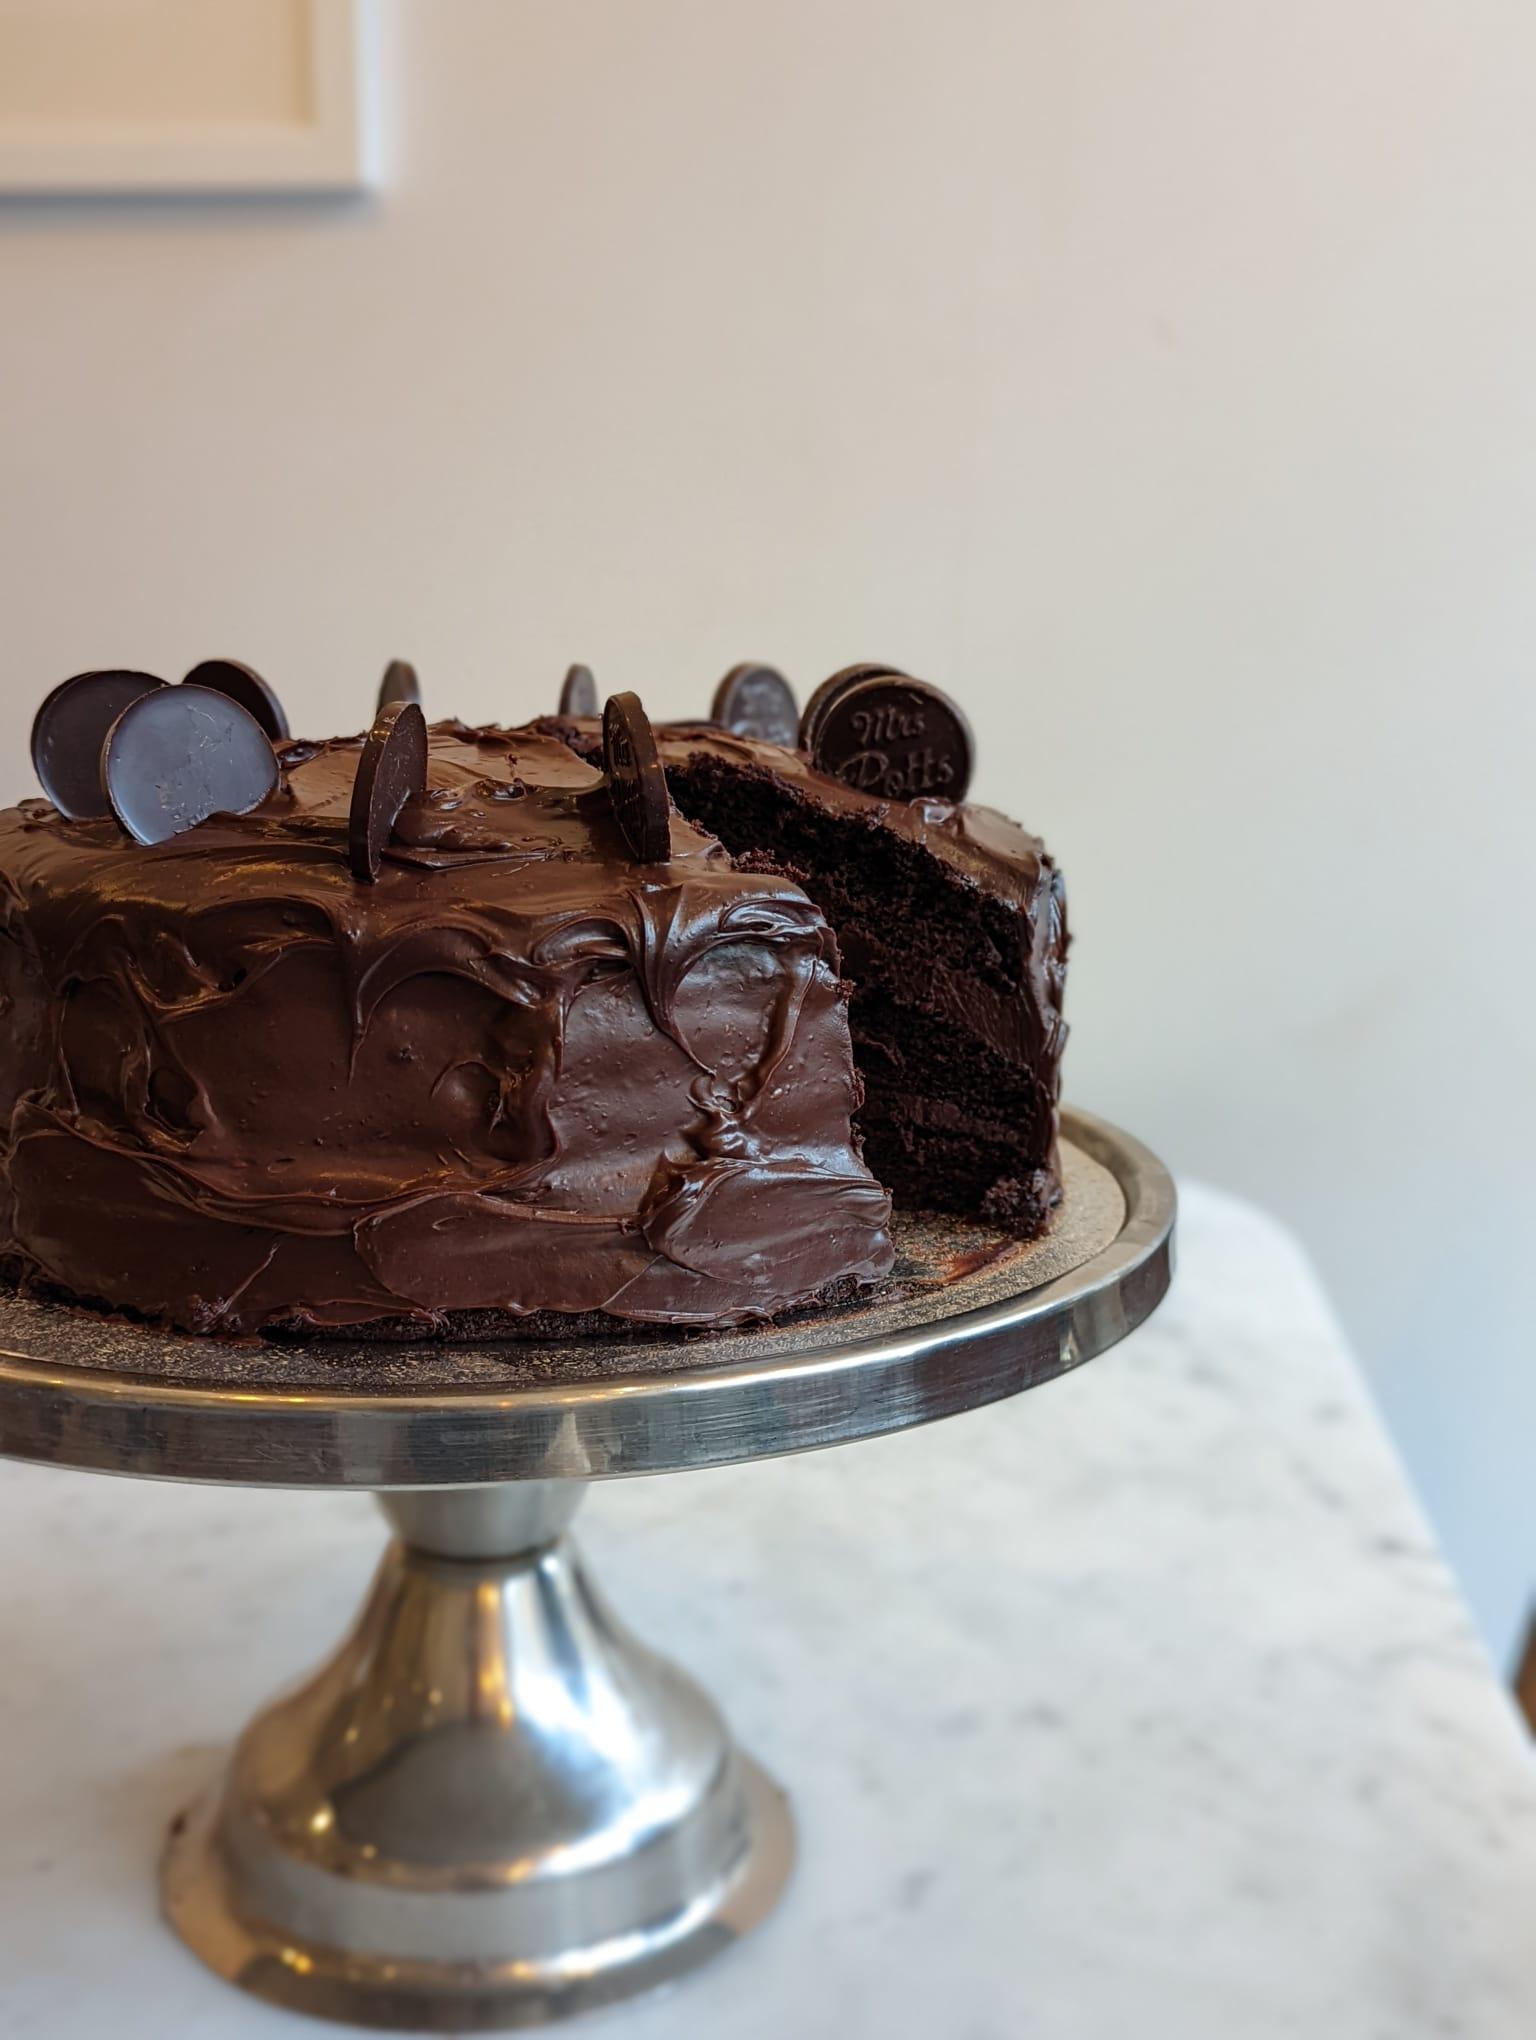 How to Make the 'Matilda' Chocolate Cake | Taste of Home